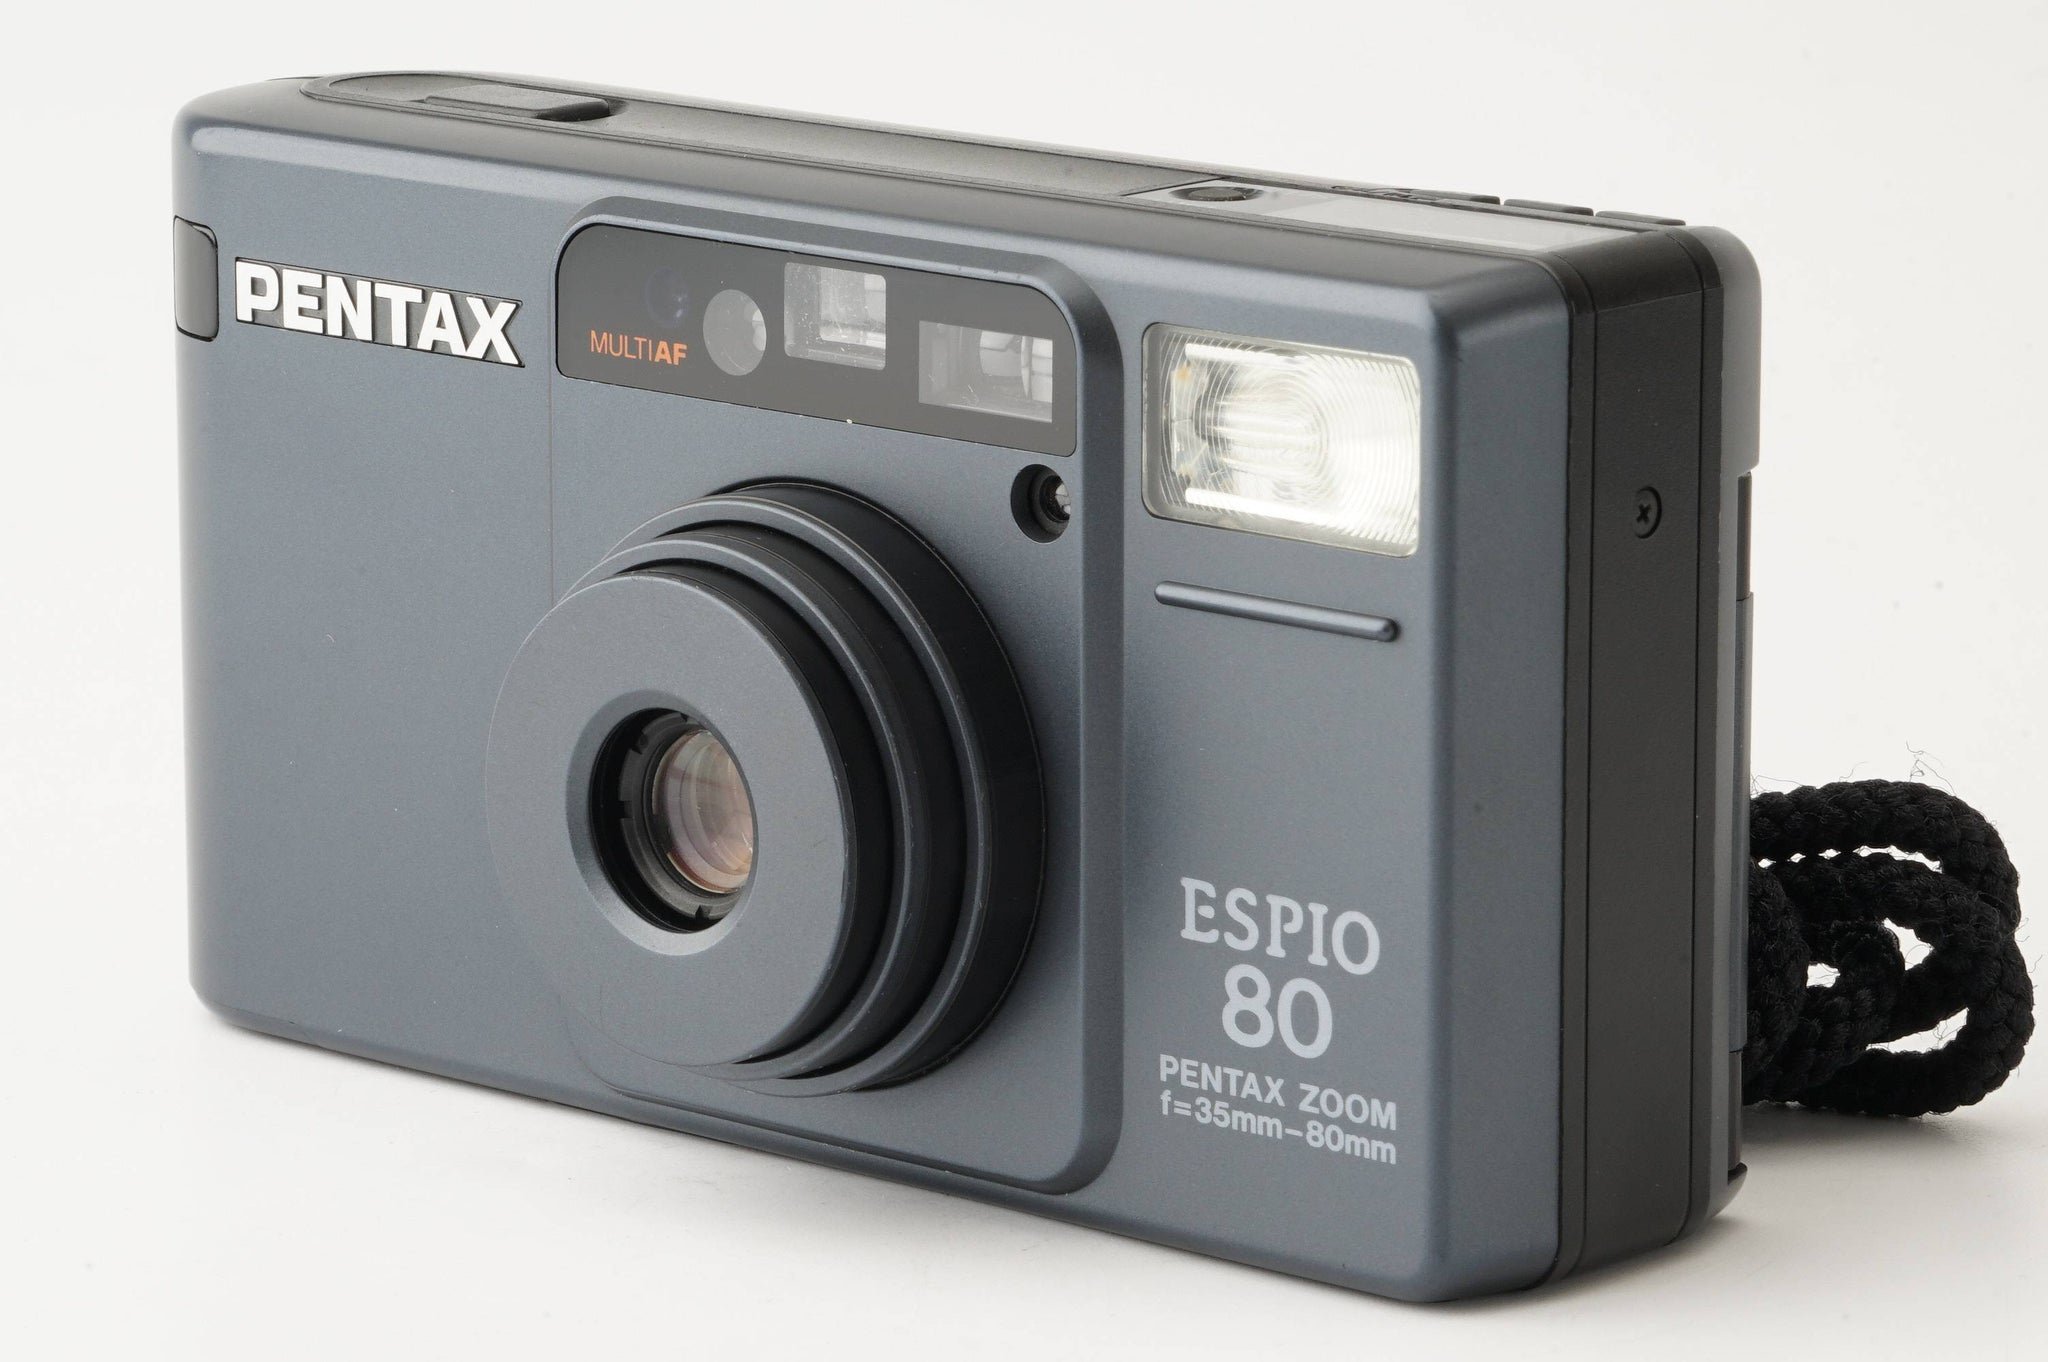 PENTAX ESPIO 80 35-80mm 《バルブシャッター搭載》